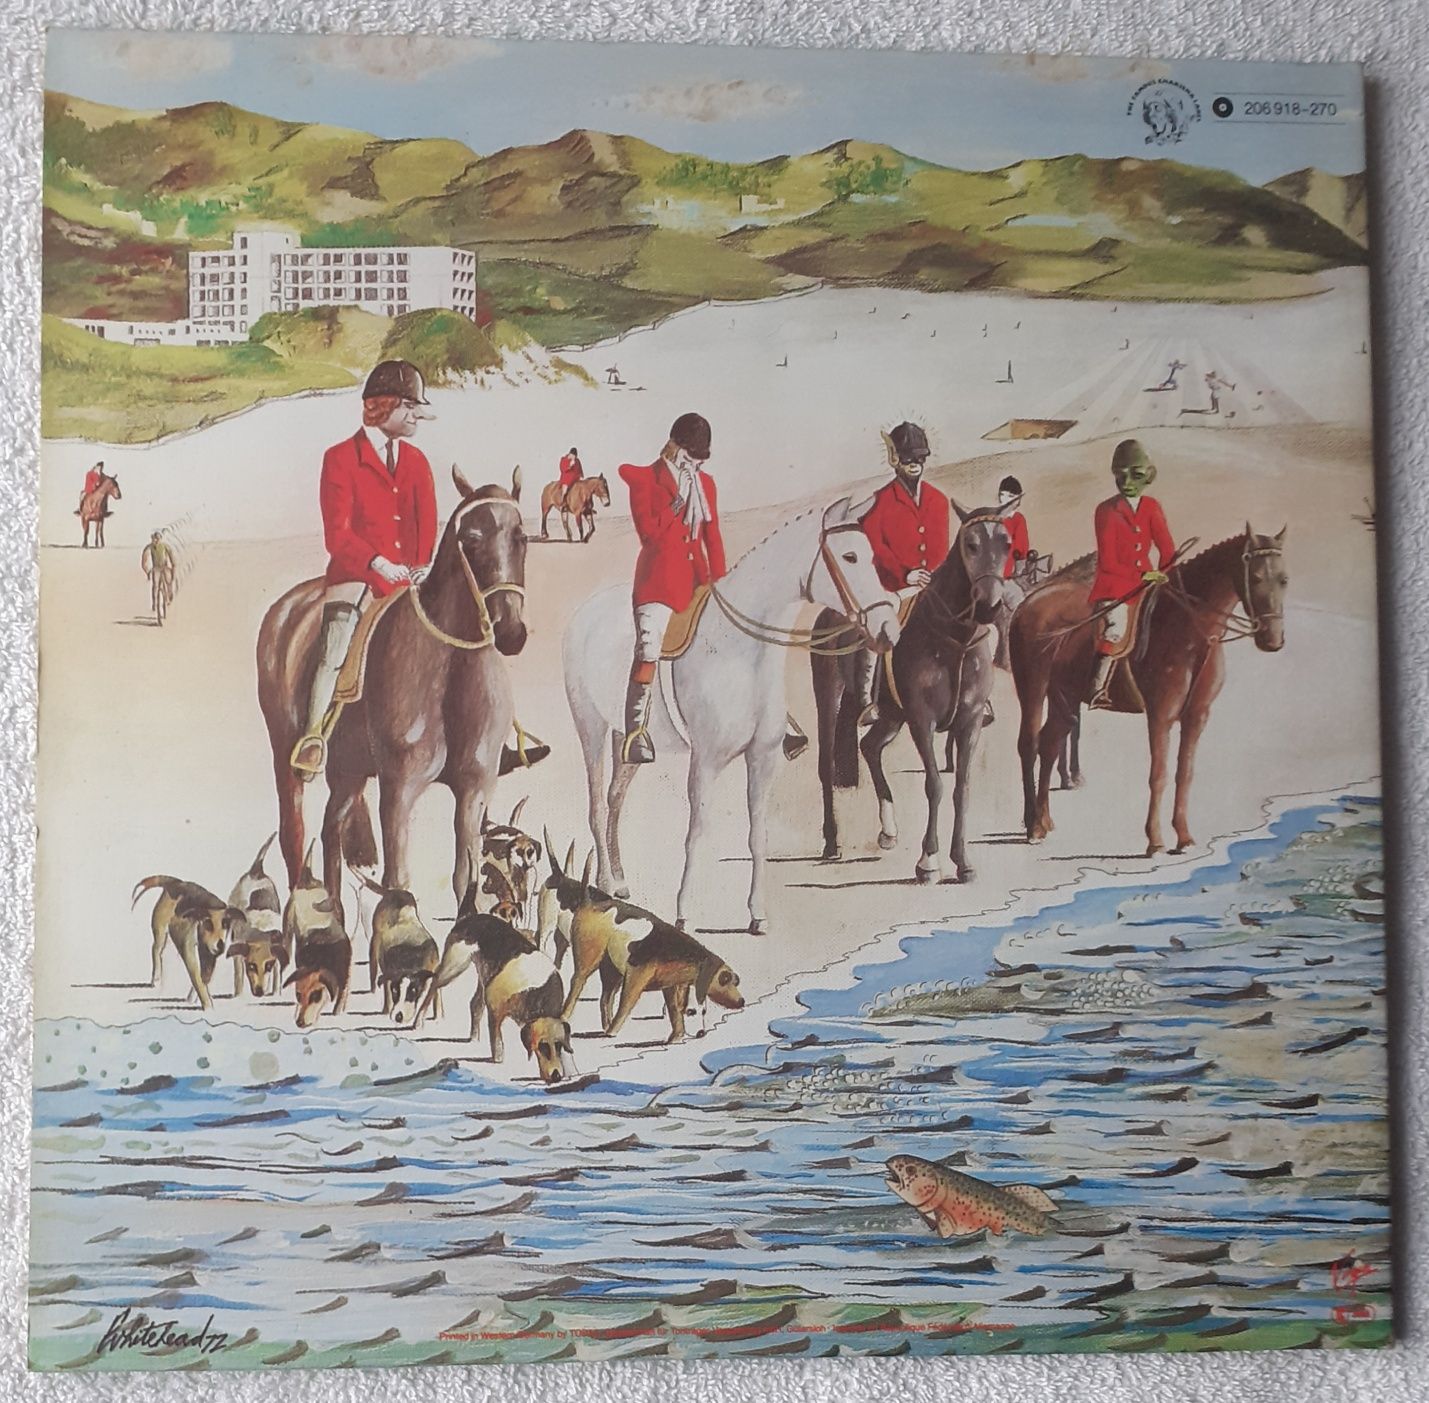 Genesis – Foxtrot (Vinyl, LP, Album)